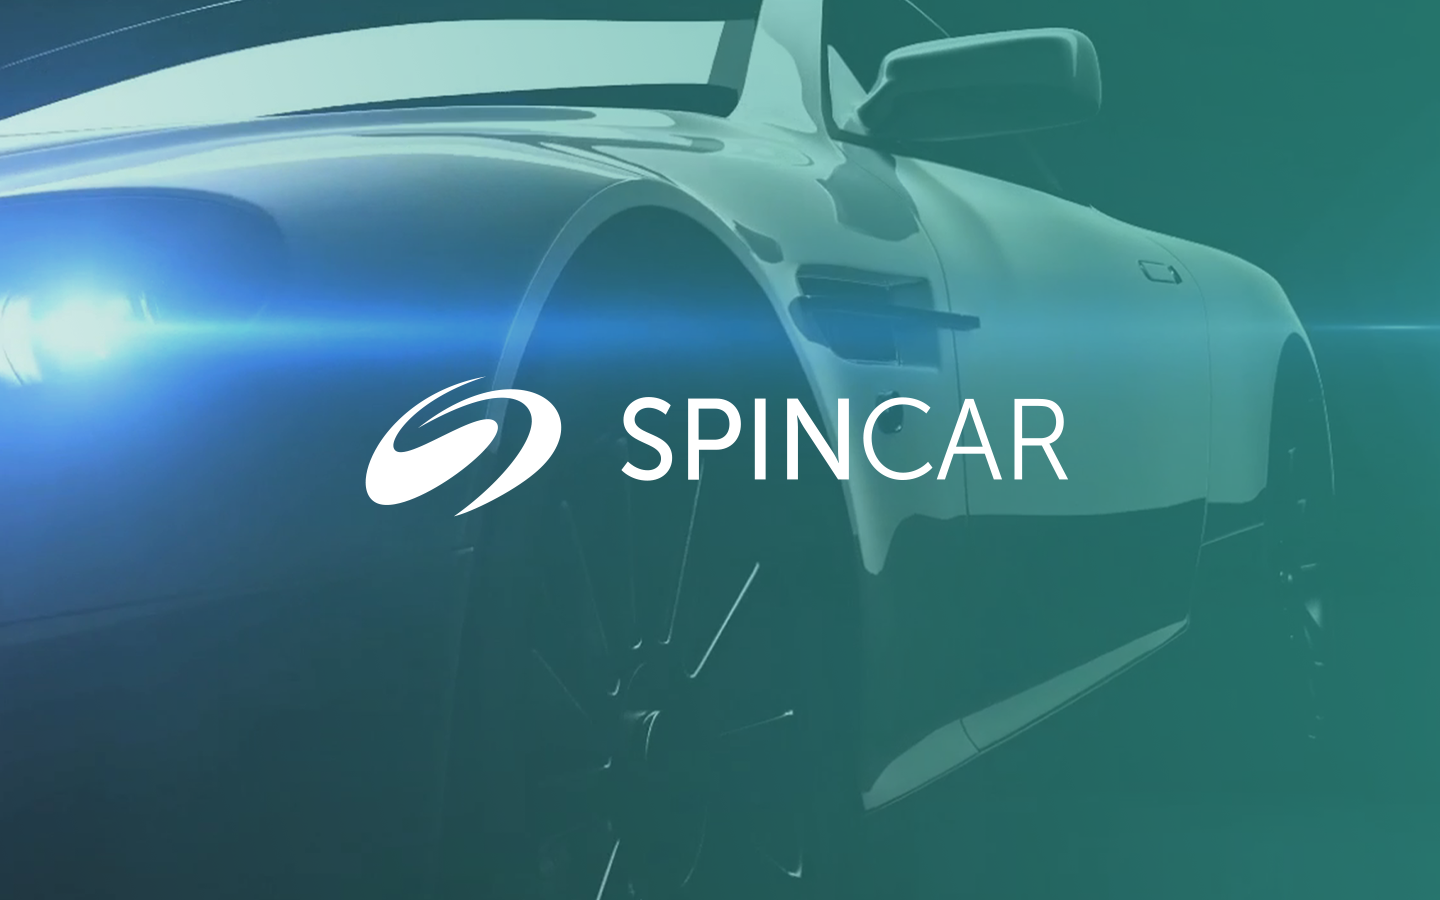 SpinCar gallery image.